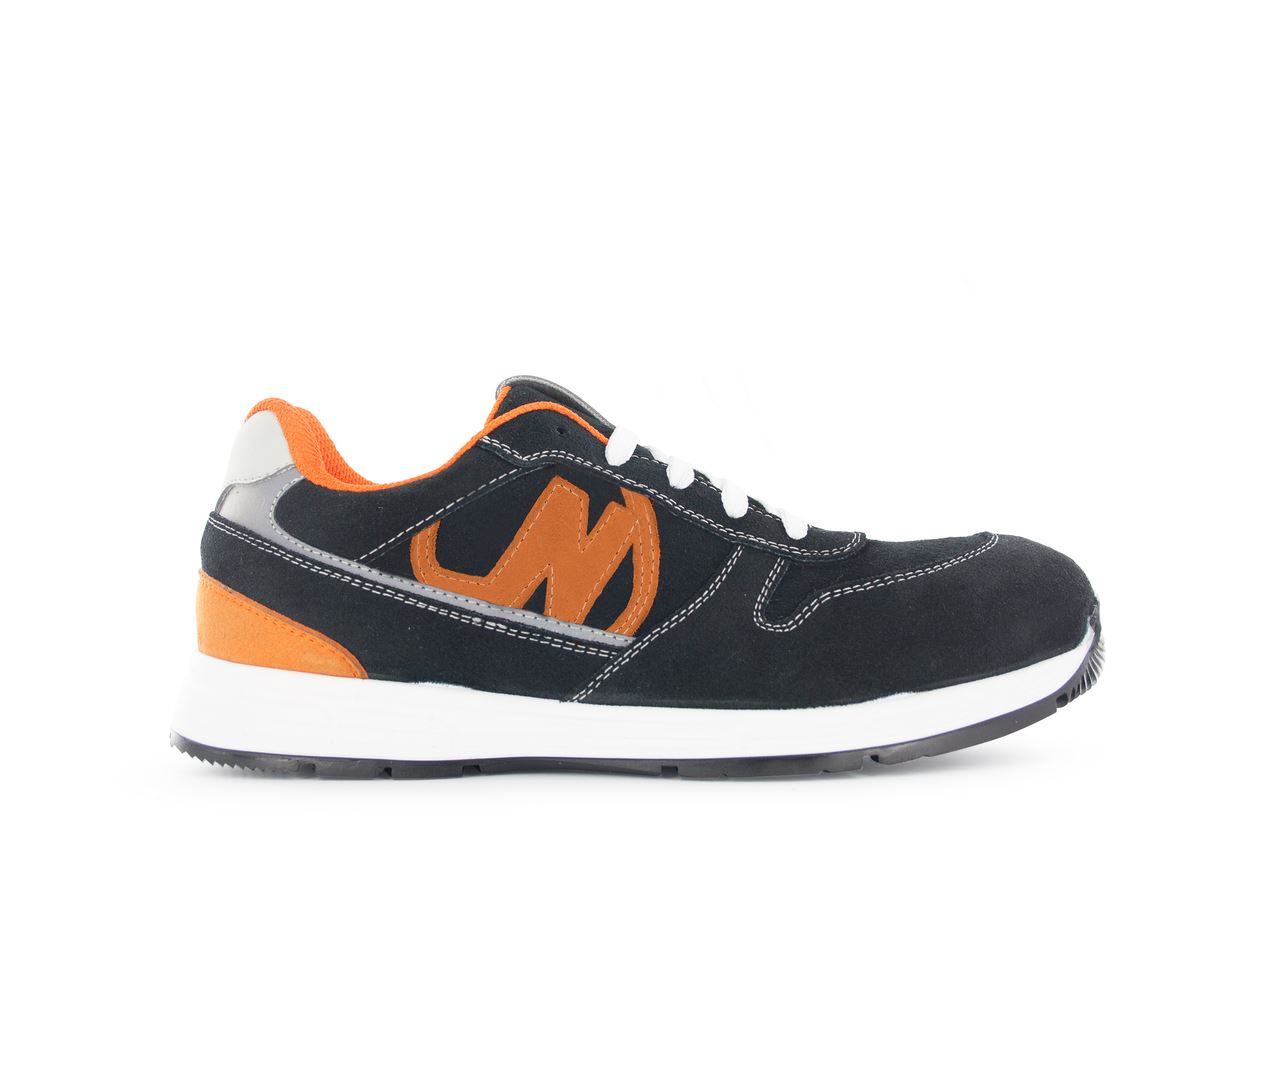 Chaussure de sécurité noir/orange Run Soft T.41 - Nord'Ways - RUN000341000NOOR